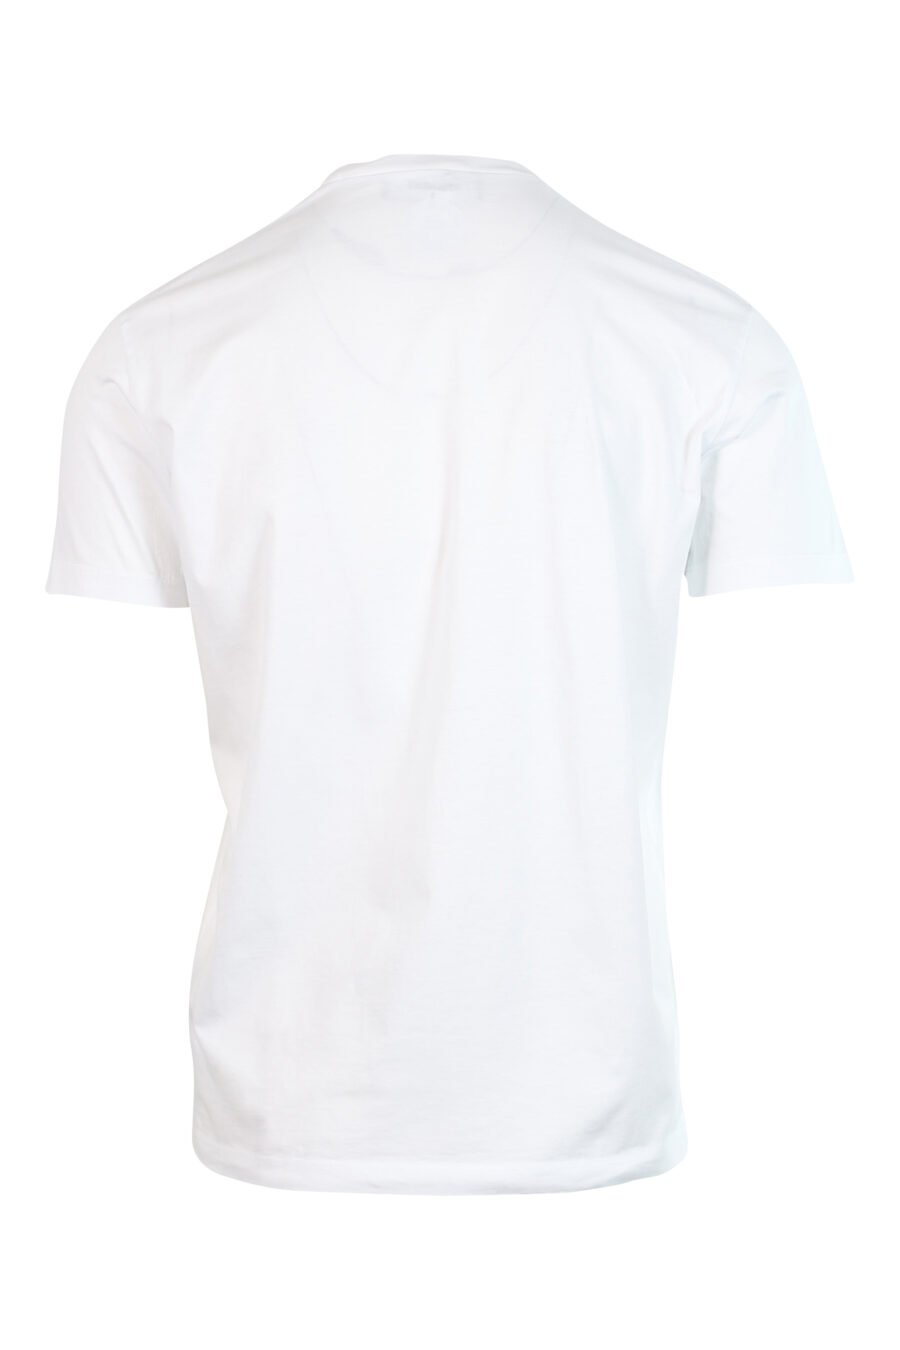 T-shirt branca com maxilogo "icon heart pixel" - 8052134980842 2